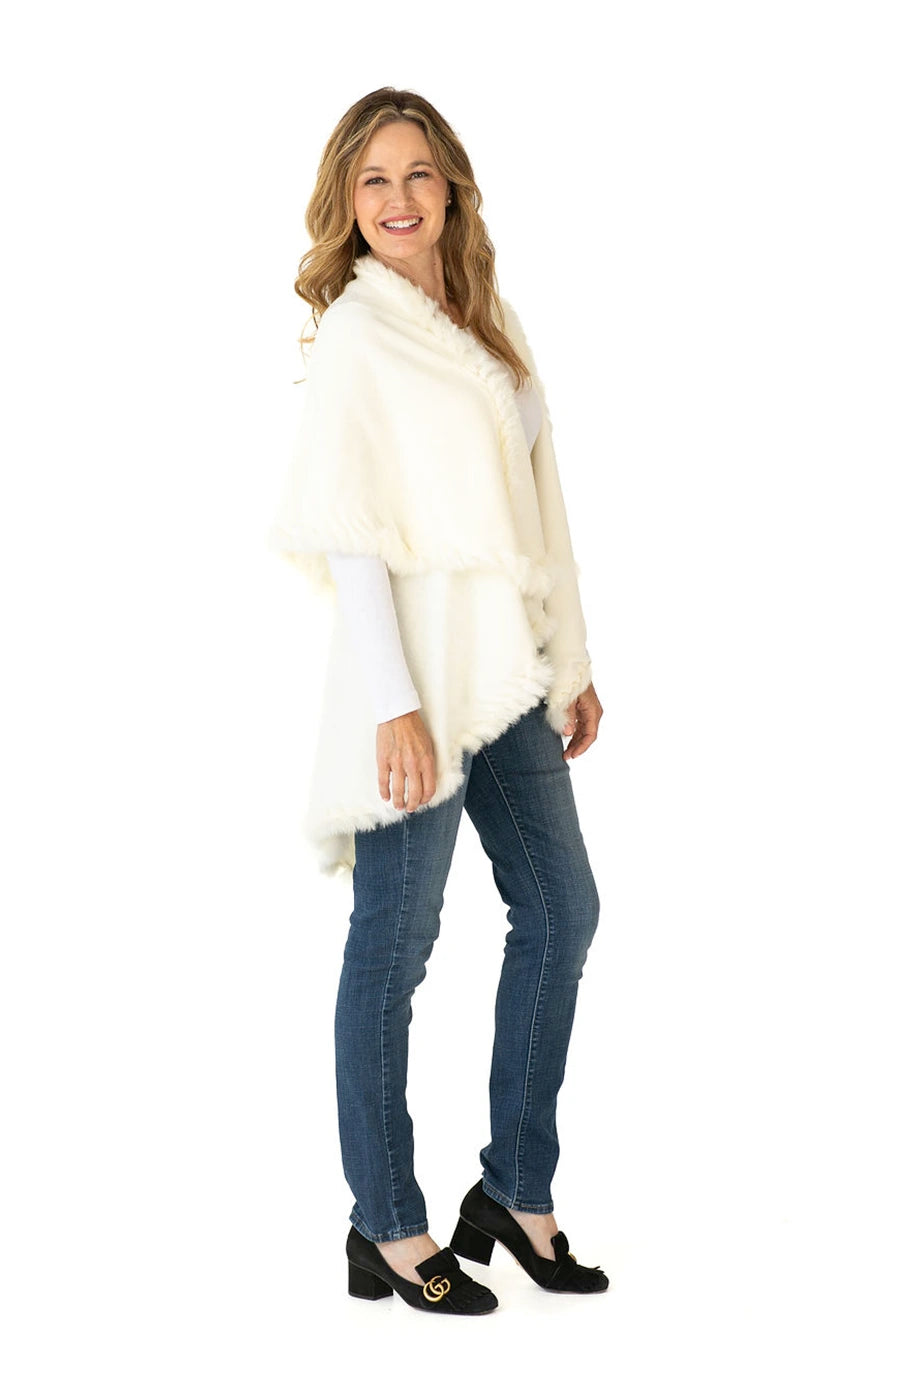 Shawl Sweater Vest in Cream with Fur Trim